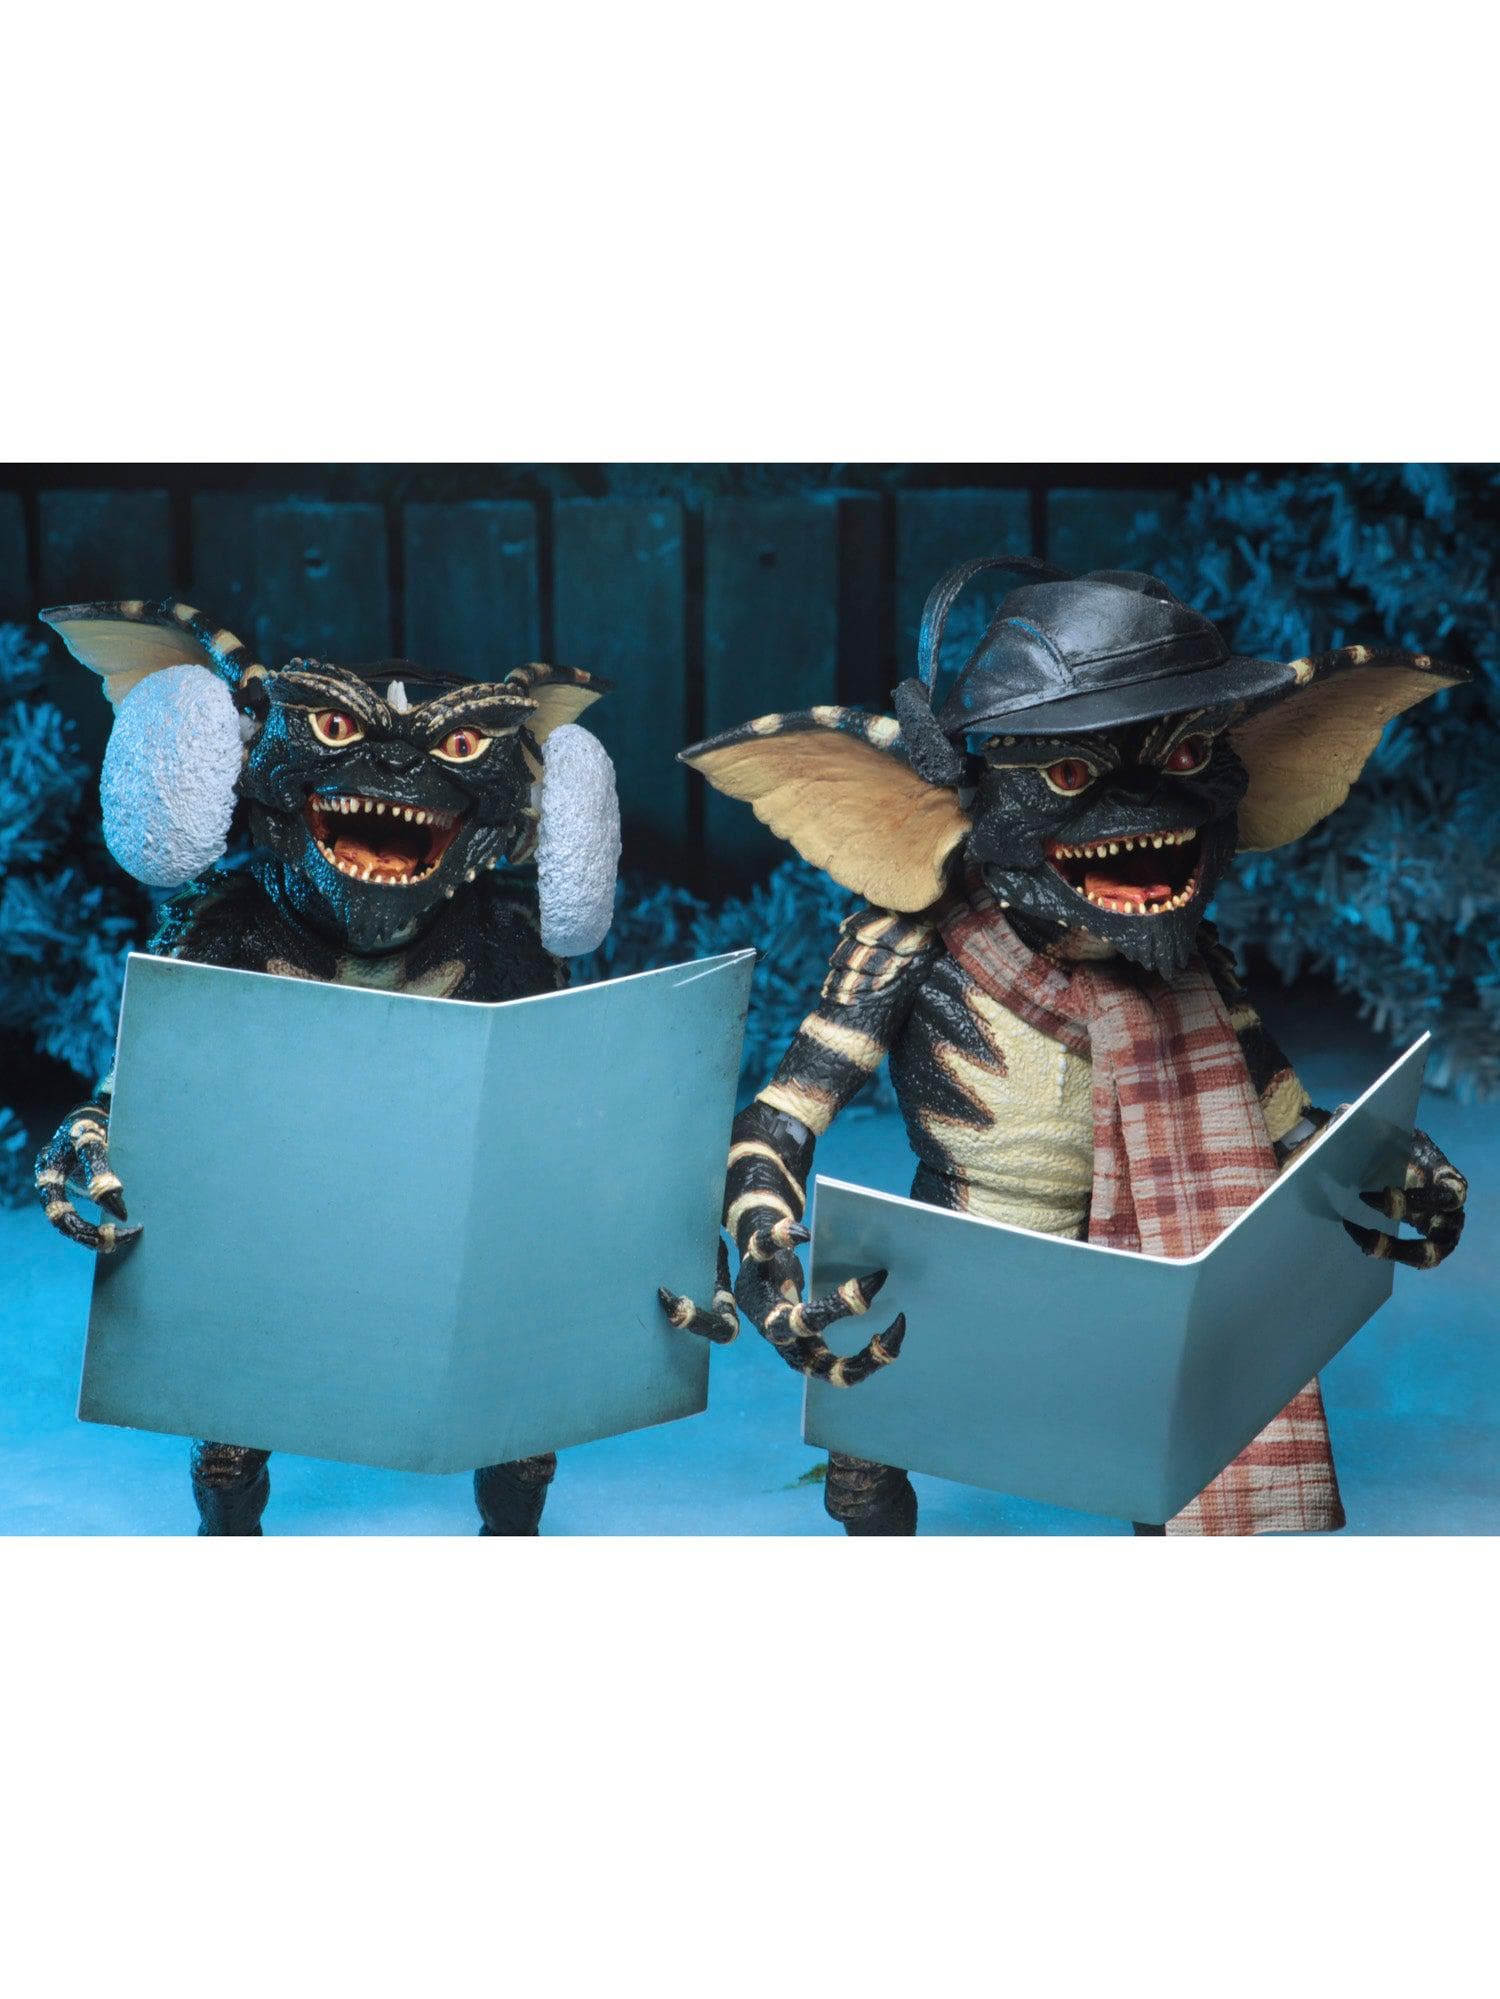 NECA - Gremlins - 7" Scale Action Figure - Christmas Carol Winter Scene - 2 Pack (Set 2 General Release) - costumes.com